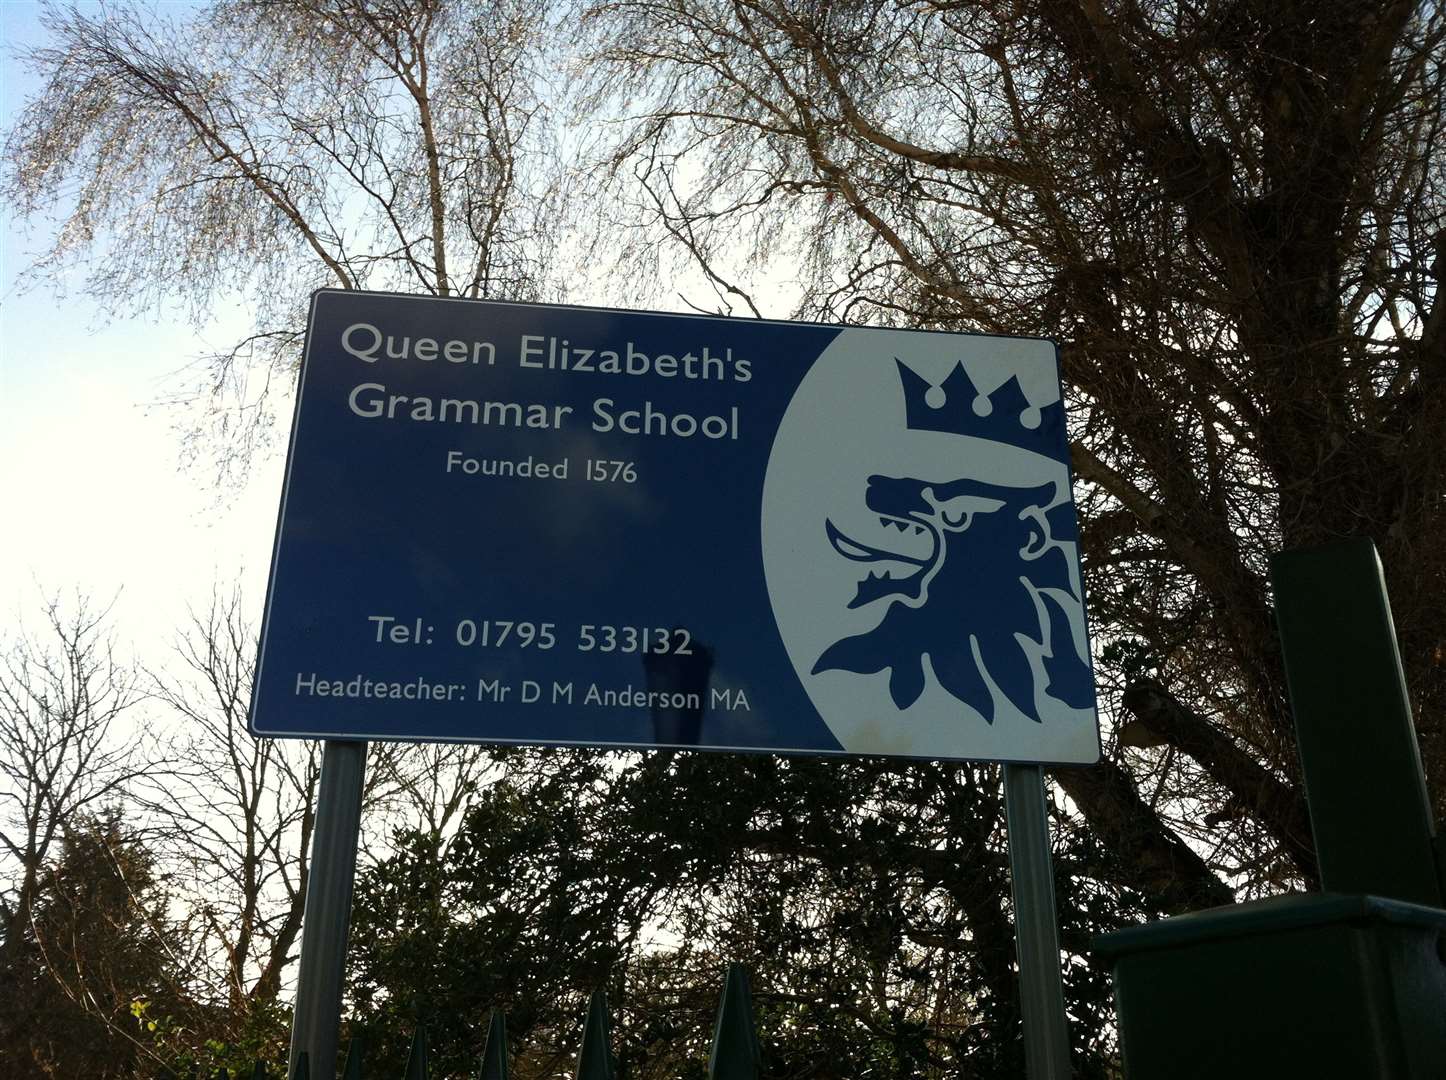 Queen Elizabeth's Grammar School in Faversham